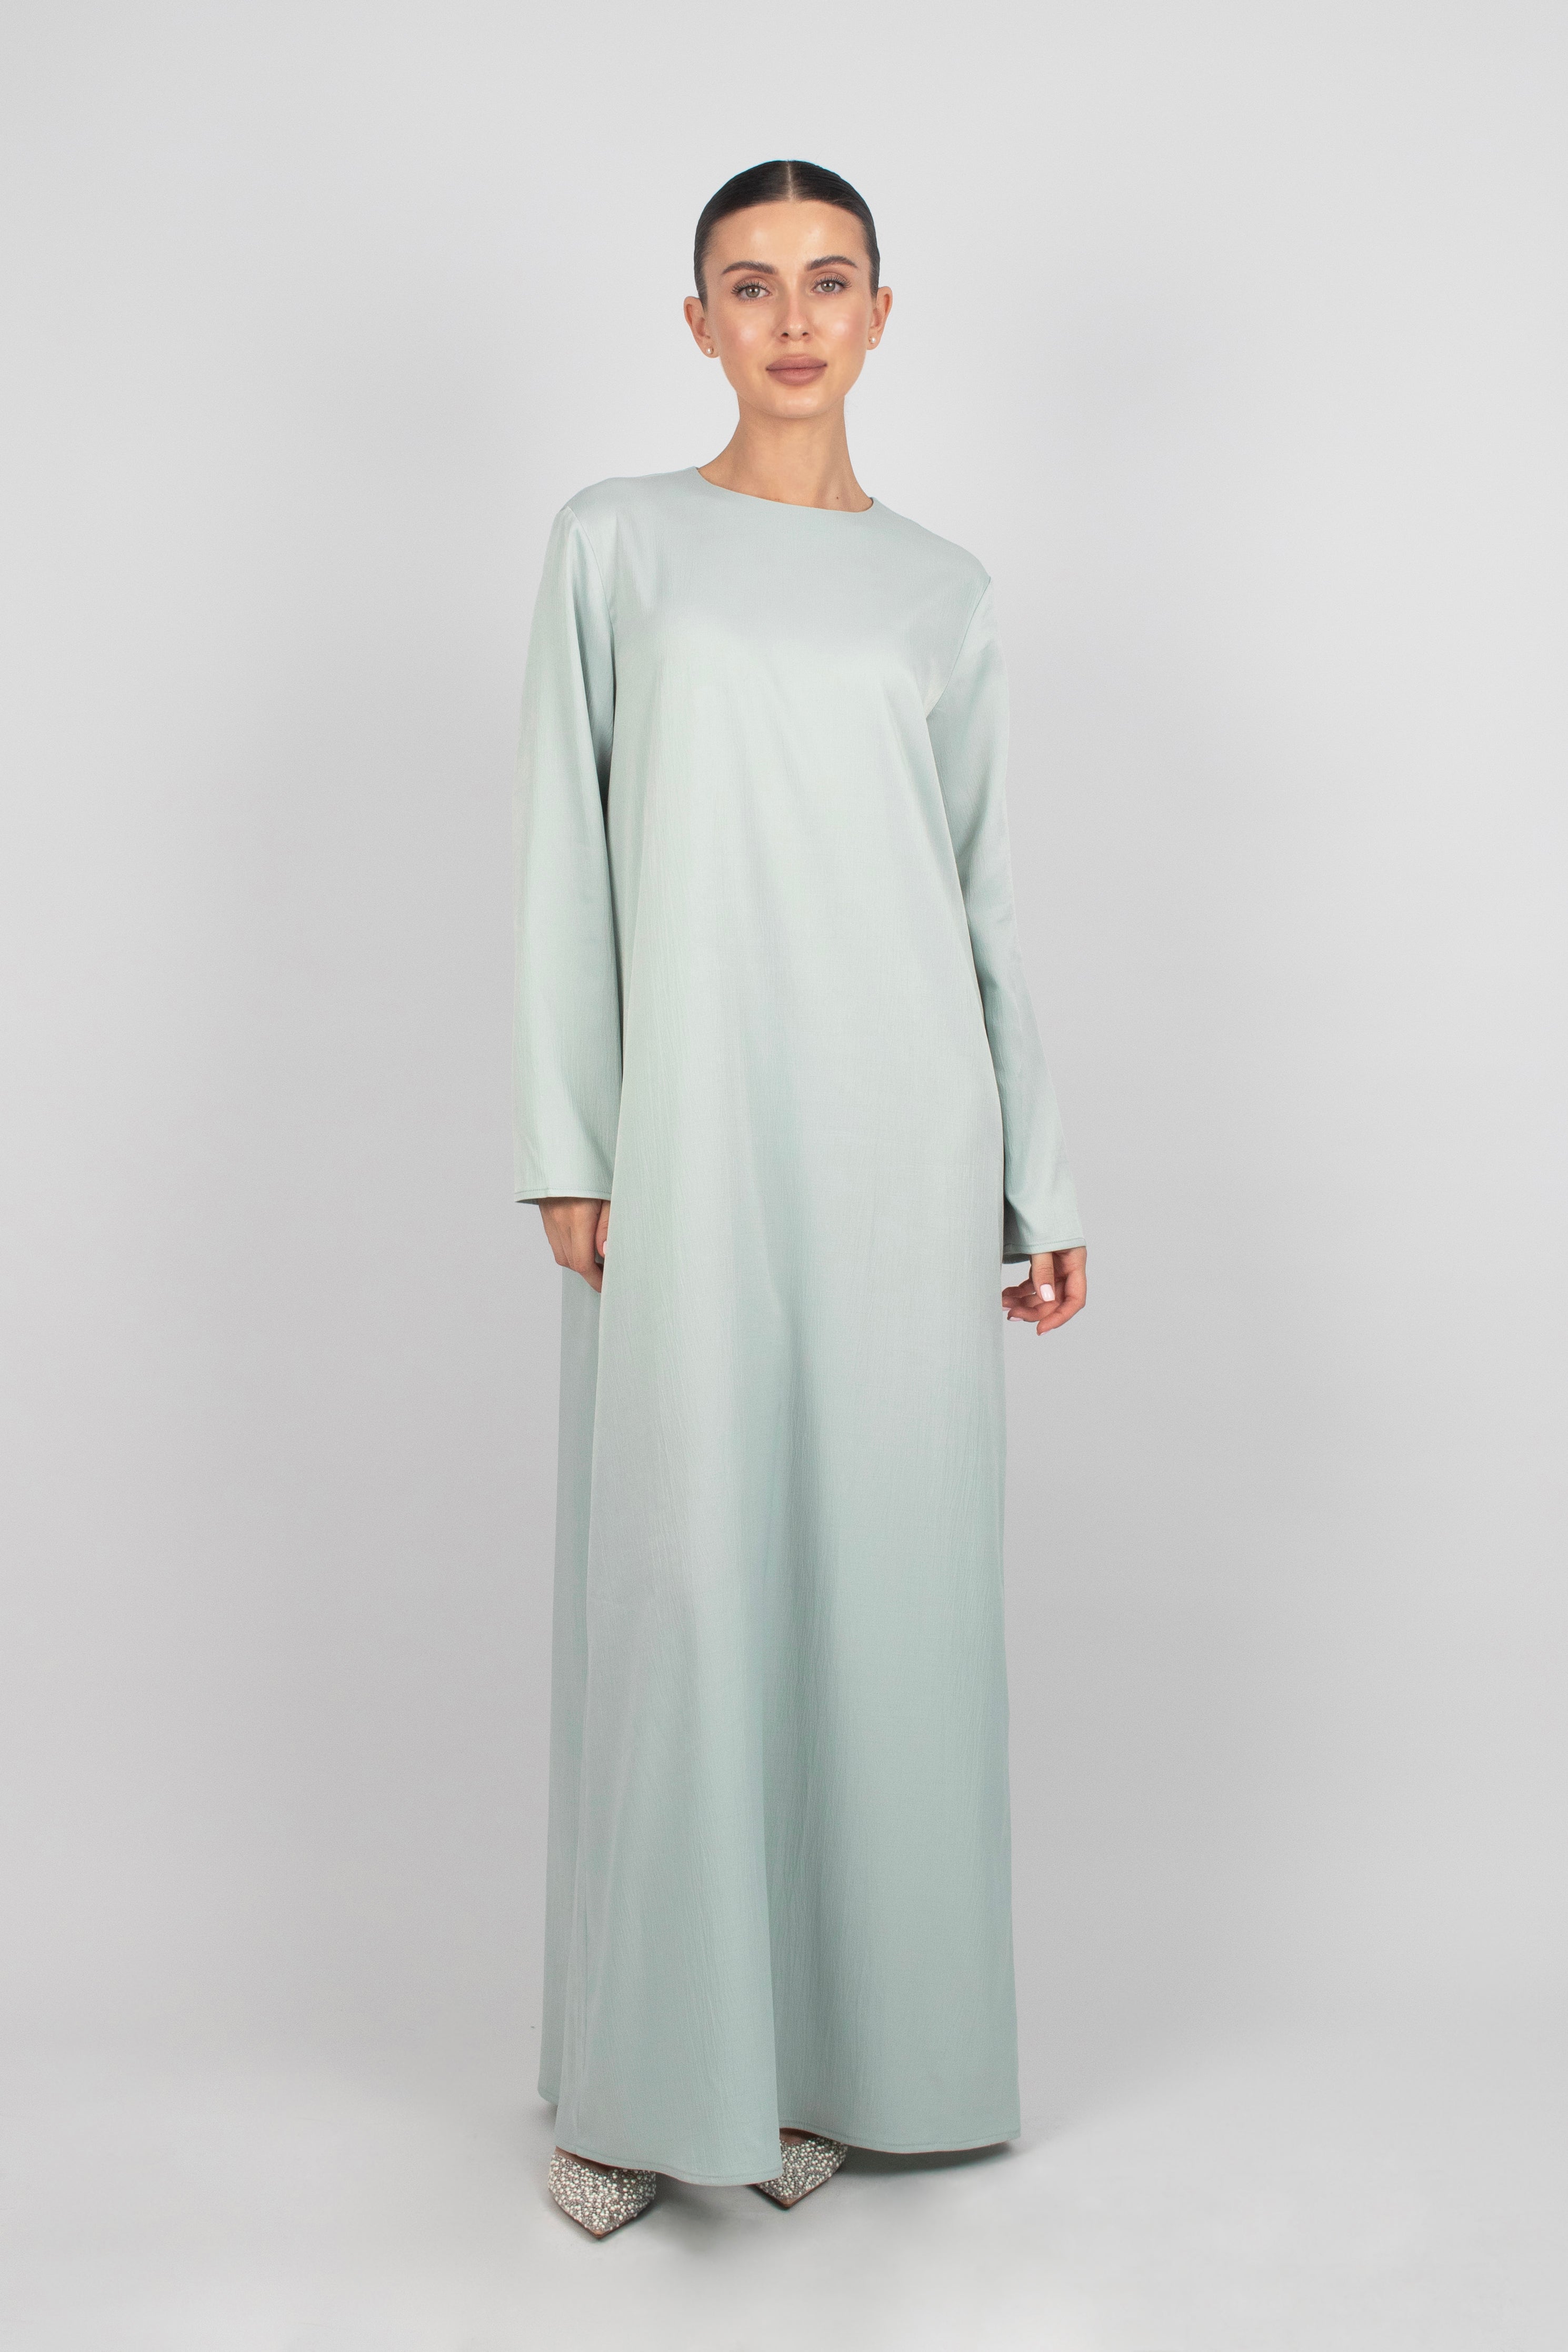 CA - Sheer Abaya and Dress Set - Sea Mist